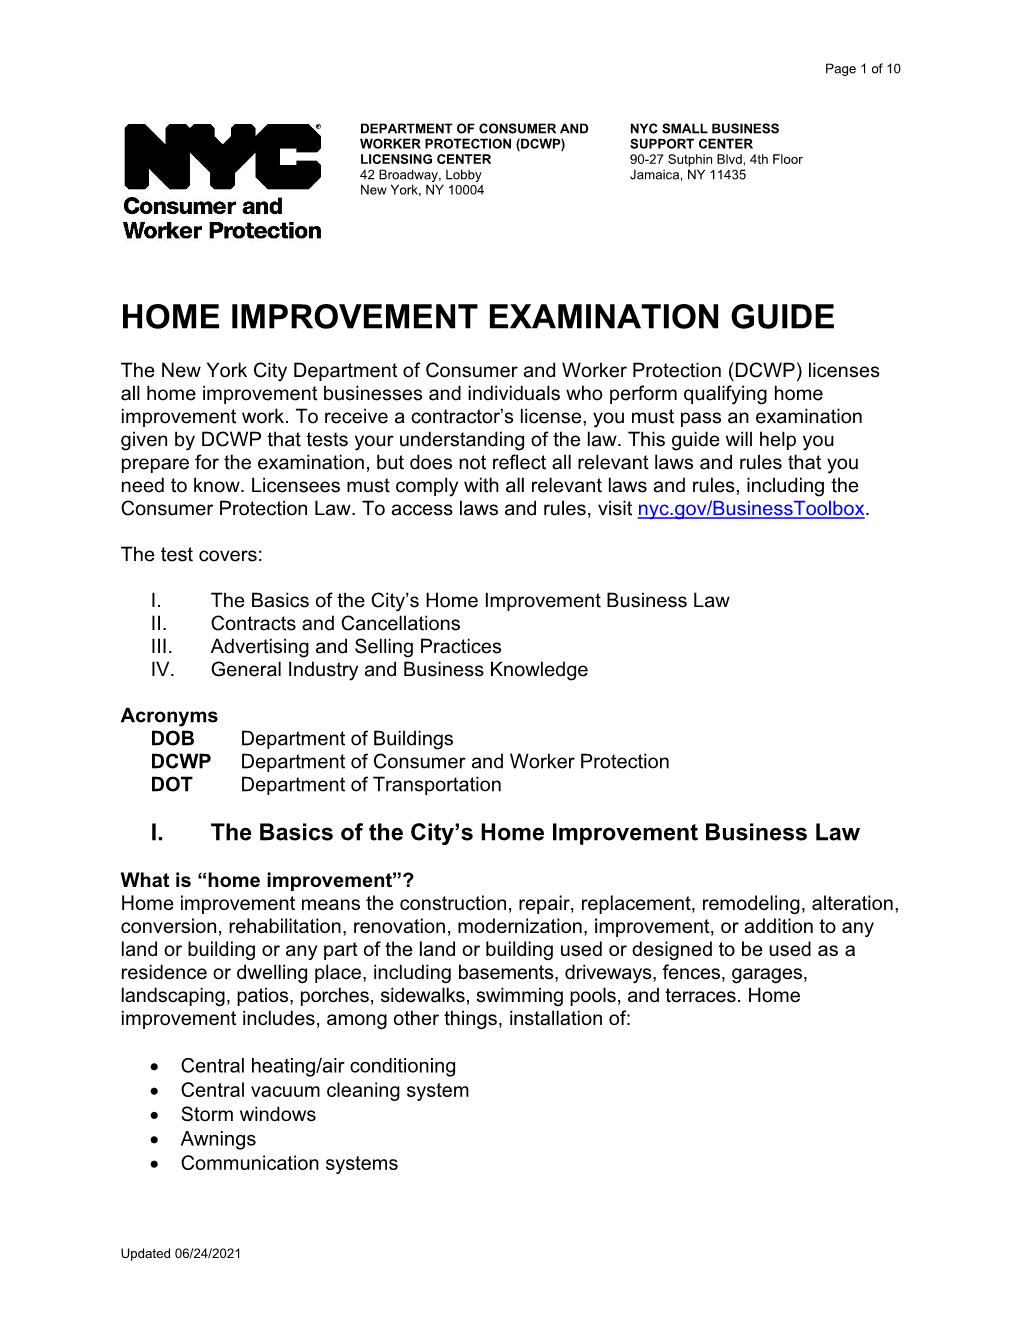 Home Improvement Examination Guide